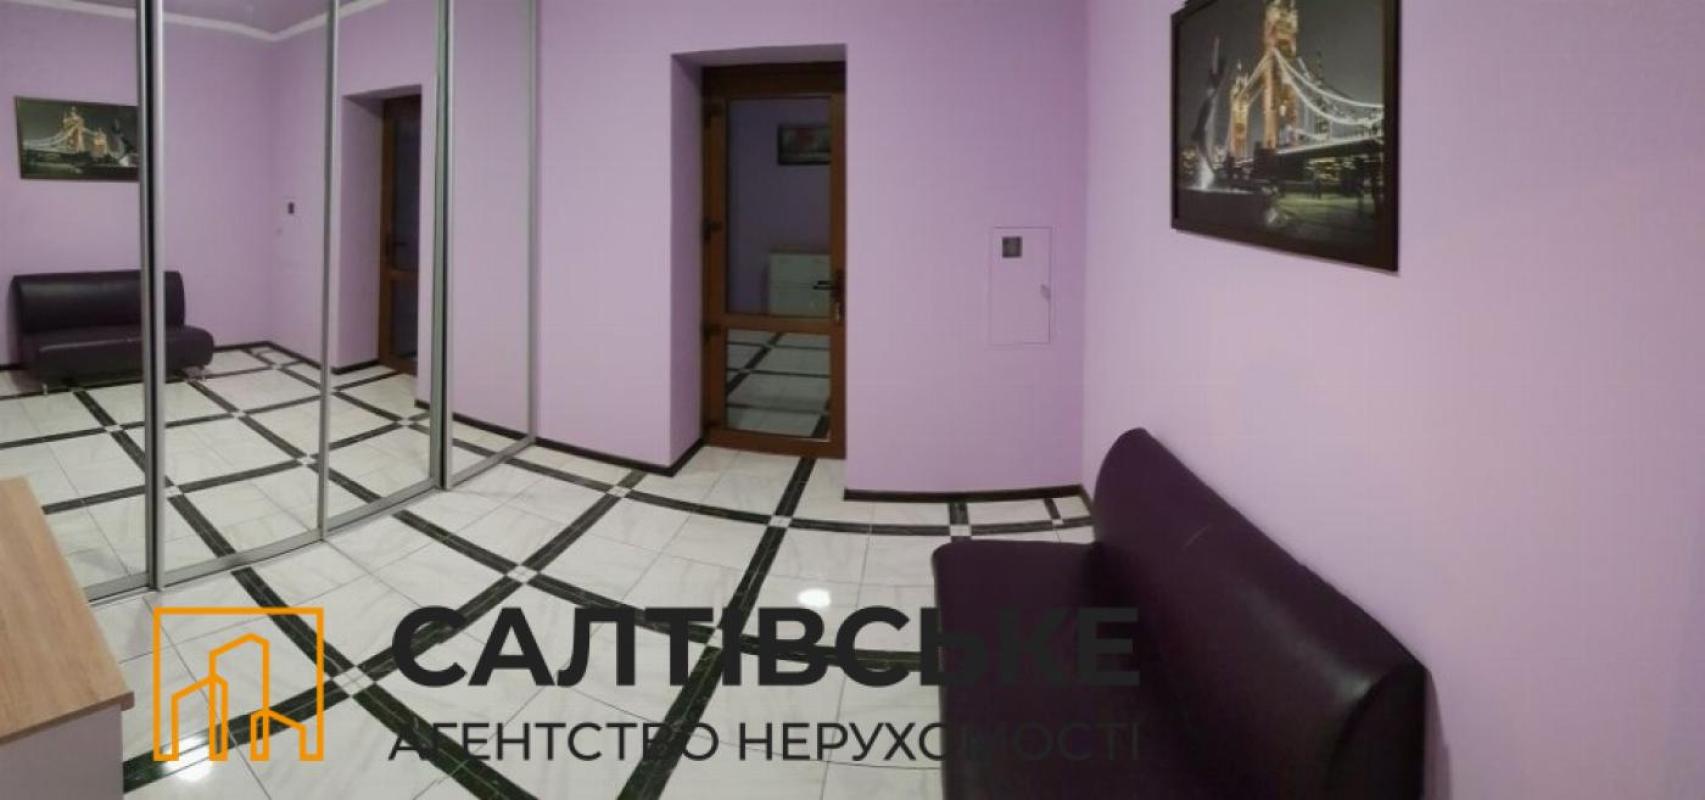 Sale 3 bedroom-(s) apartment 123 sq. m., Akademika Barabashova Street 32